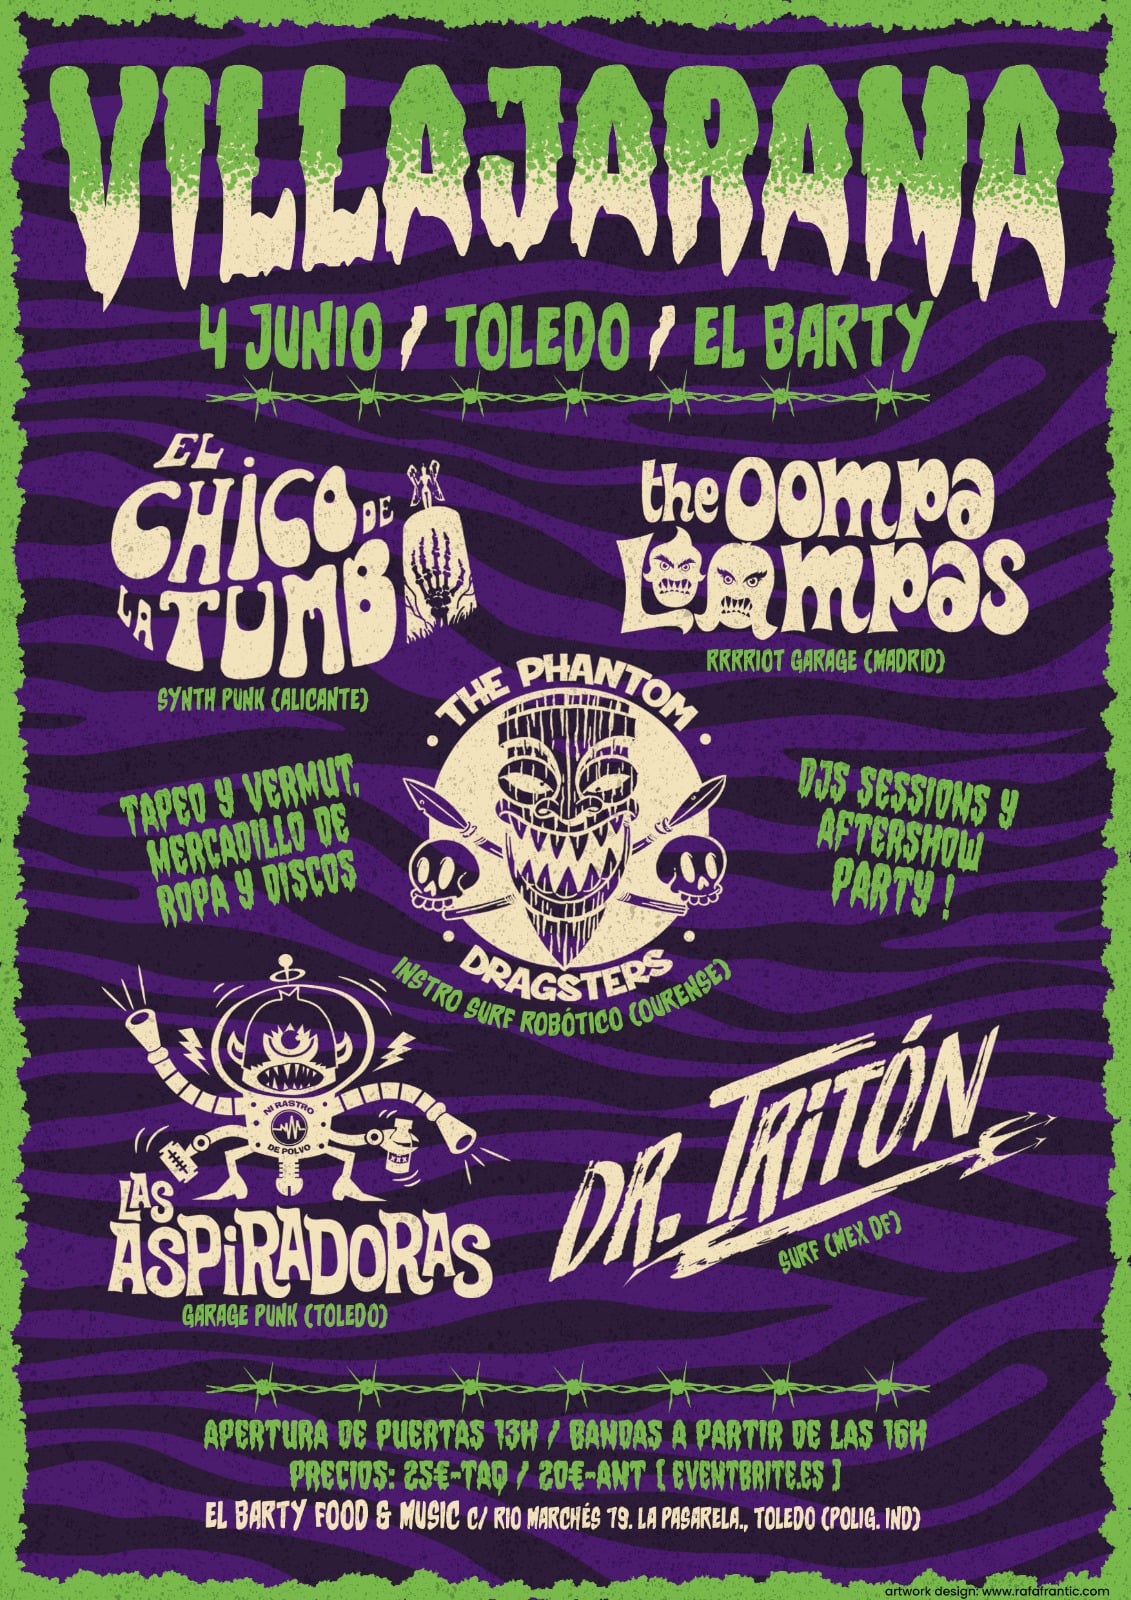 VillaJarana Fest (I) 2022 [El Barty @ Toledo] DR. TRITON + LAS ASPIRADORAS + THE PHANTOM DRAGSTERS + EL CHICO DE LA TUMBA + THE OOMPA LOOMPAS